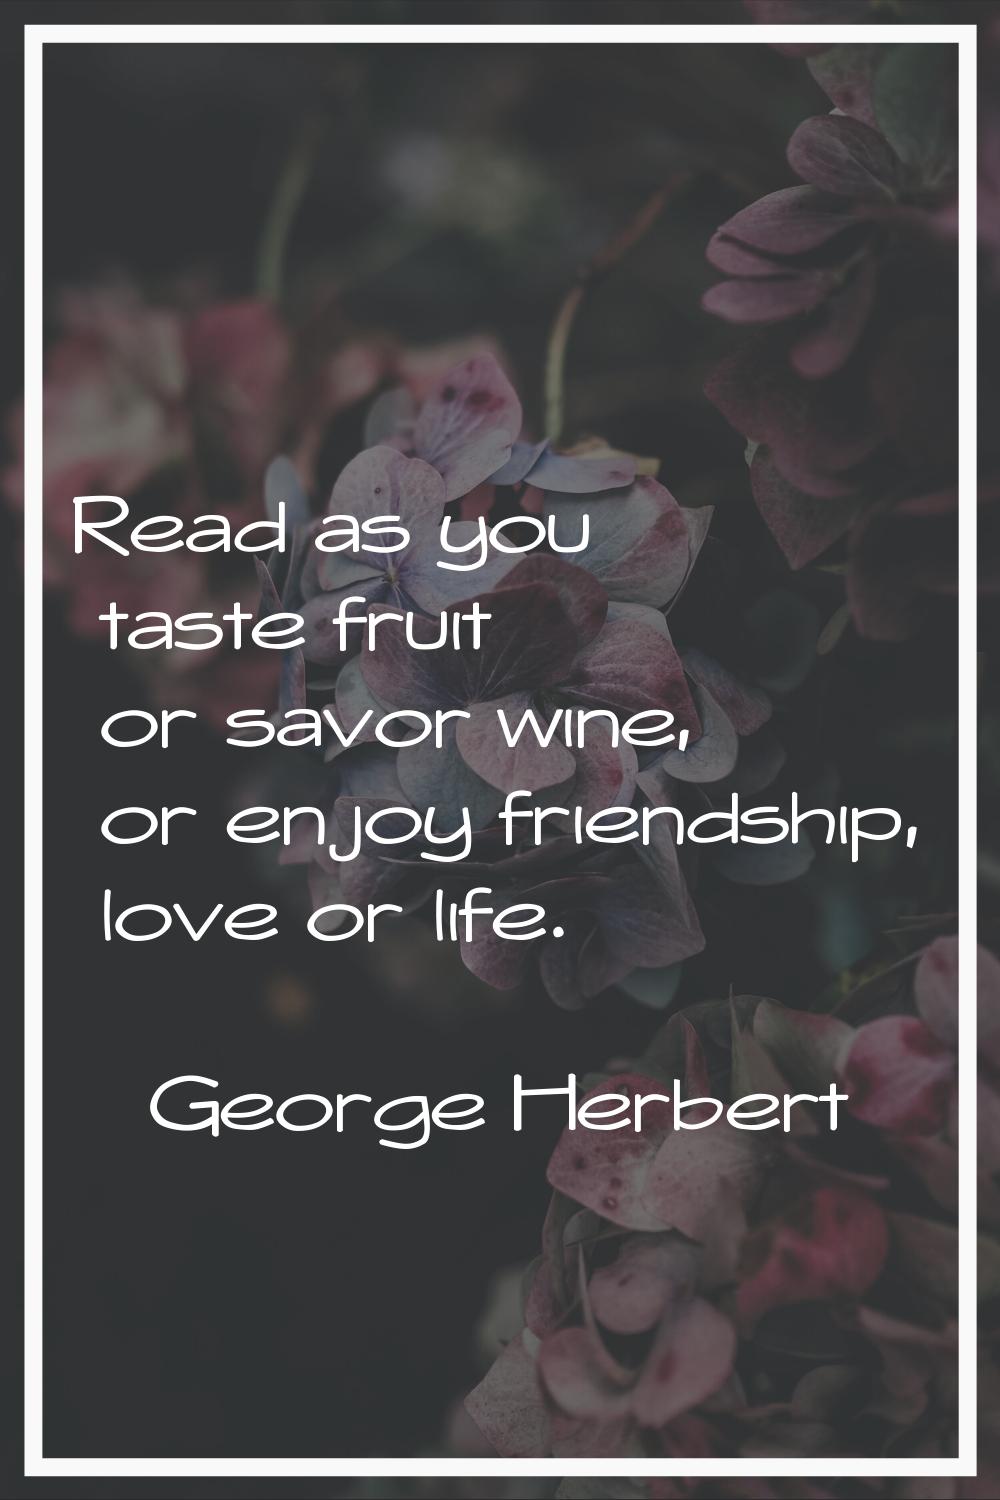 Read as you taste fruit or savor wine, or enjoy friendship, love or life.